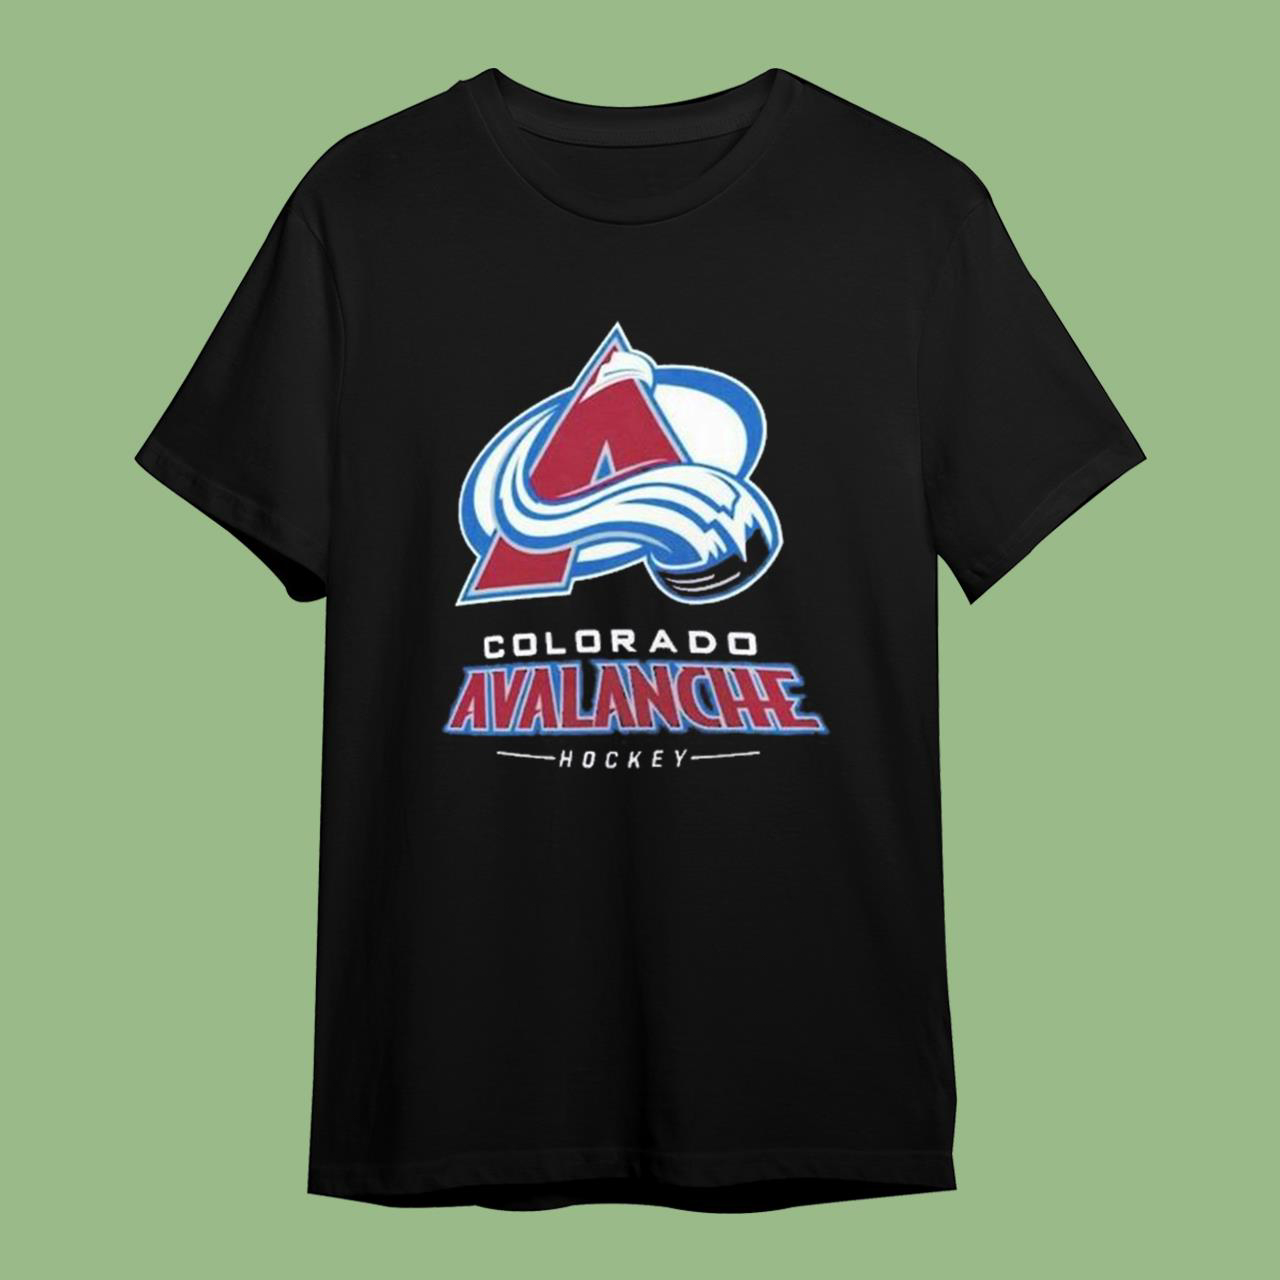 Colorado Avalanche Team Hockey T-Shirt